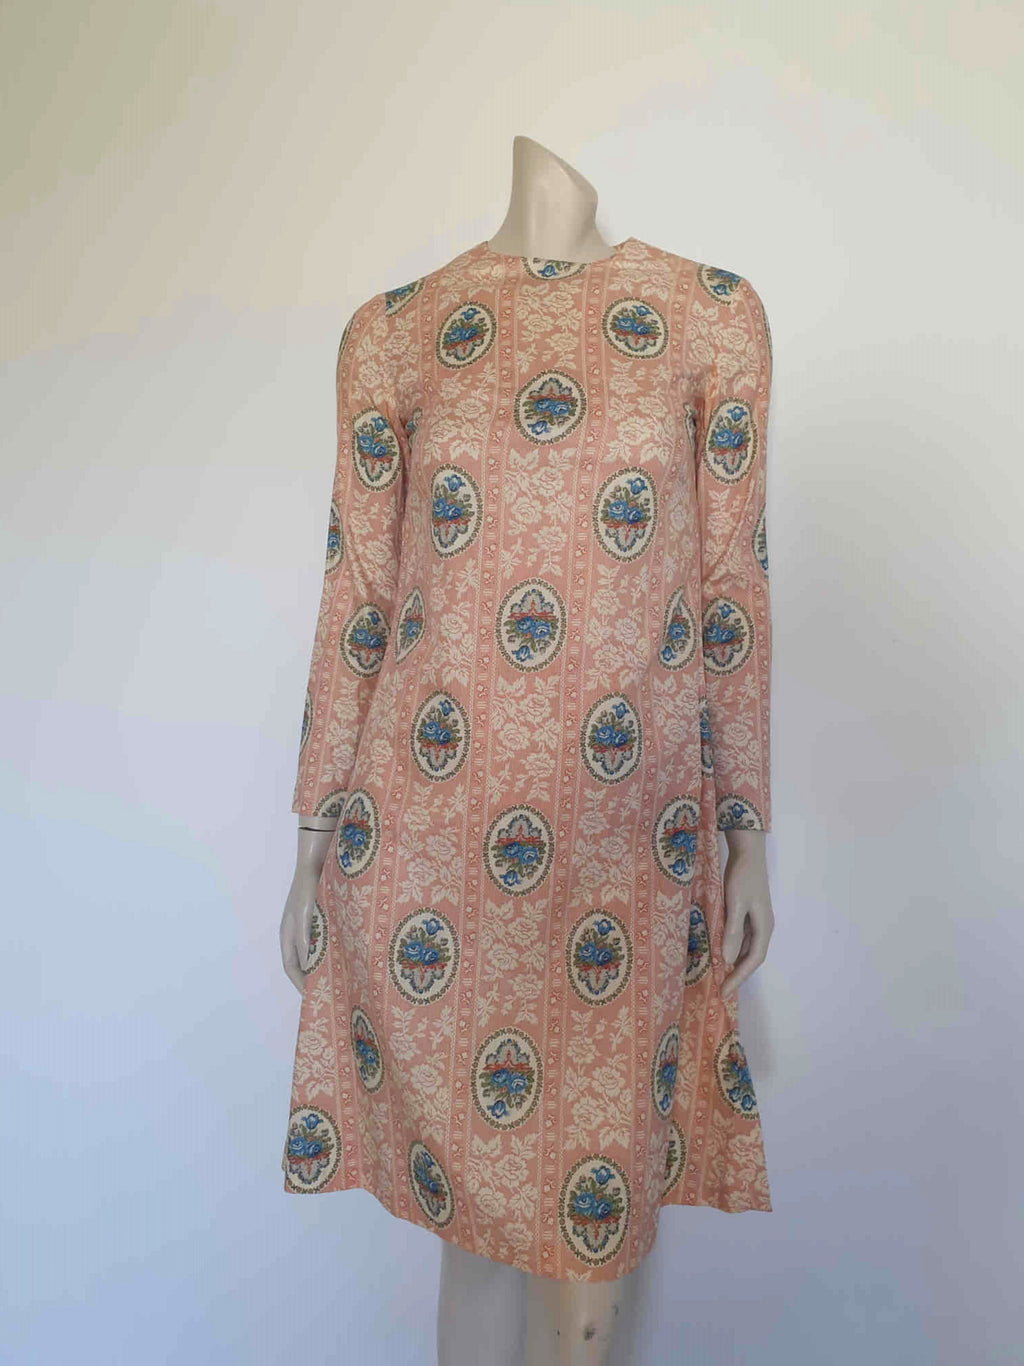 1960s 1970s vintage pink cotton floral dress